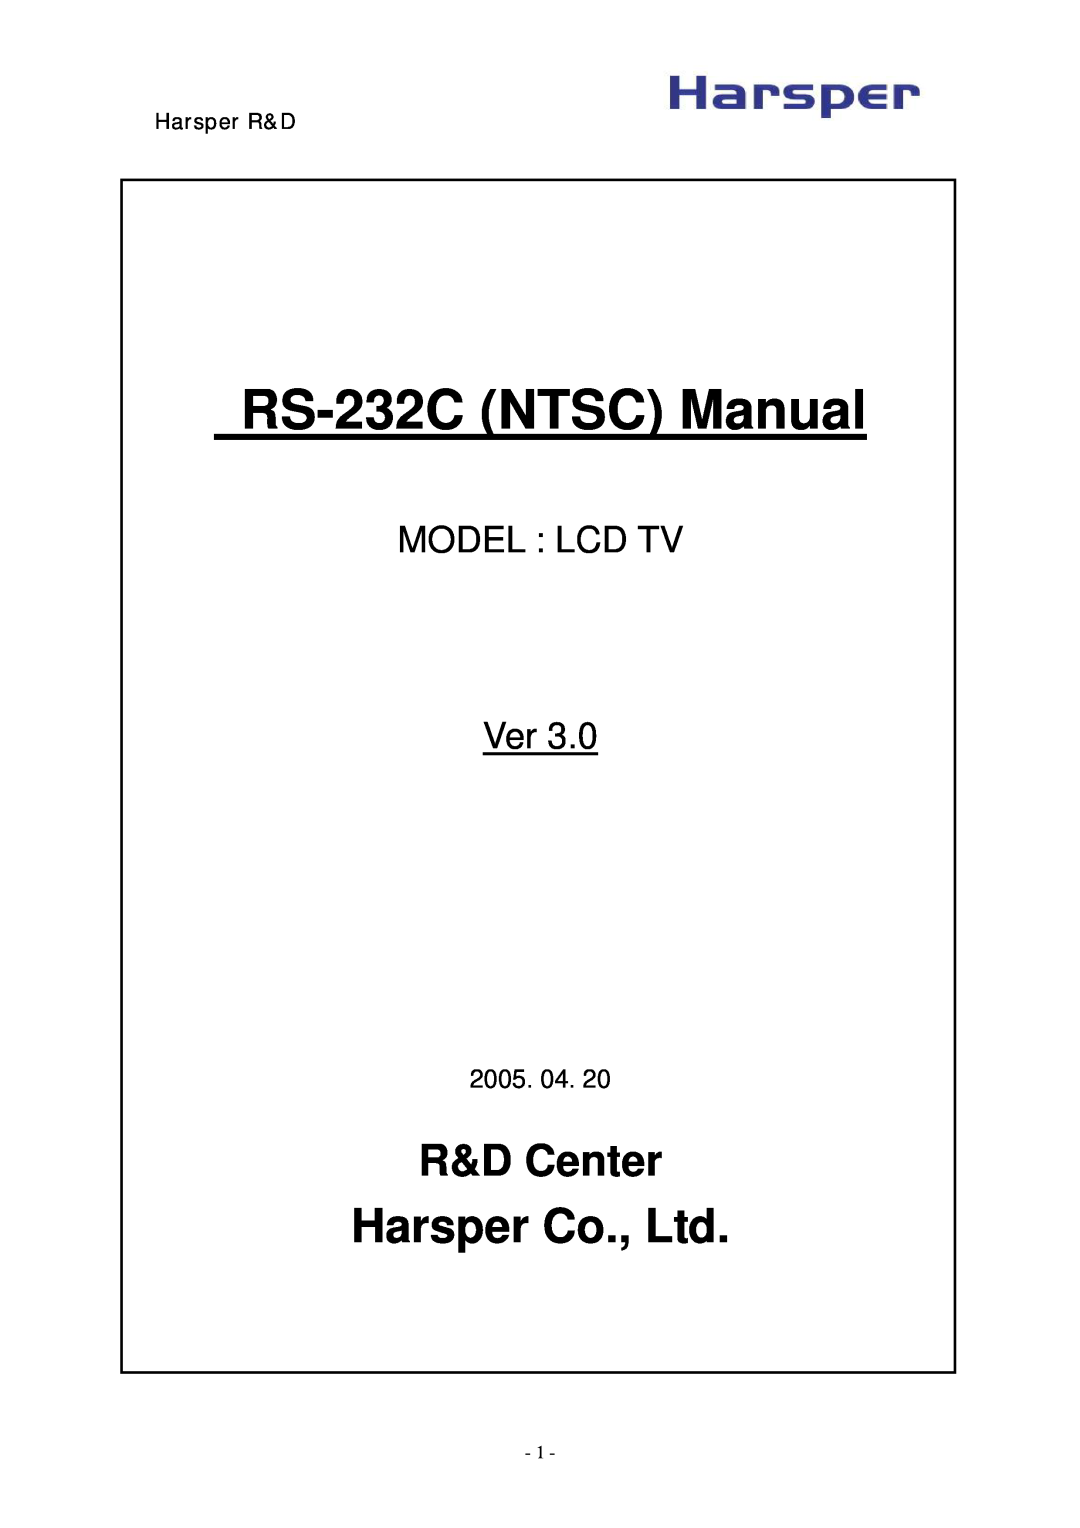 InFocus manual RS-232C NTSC Manual, R&D Center, MODEL LCD TV Ver, 2005. 04, Harsper R&D 